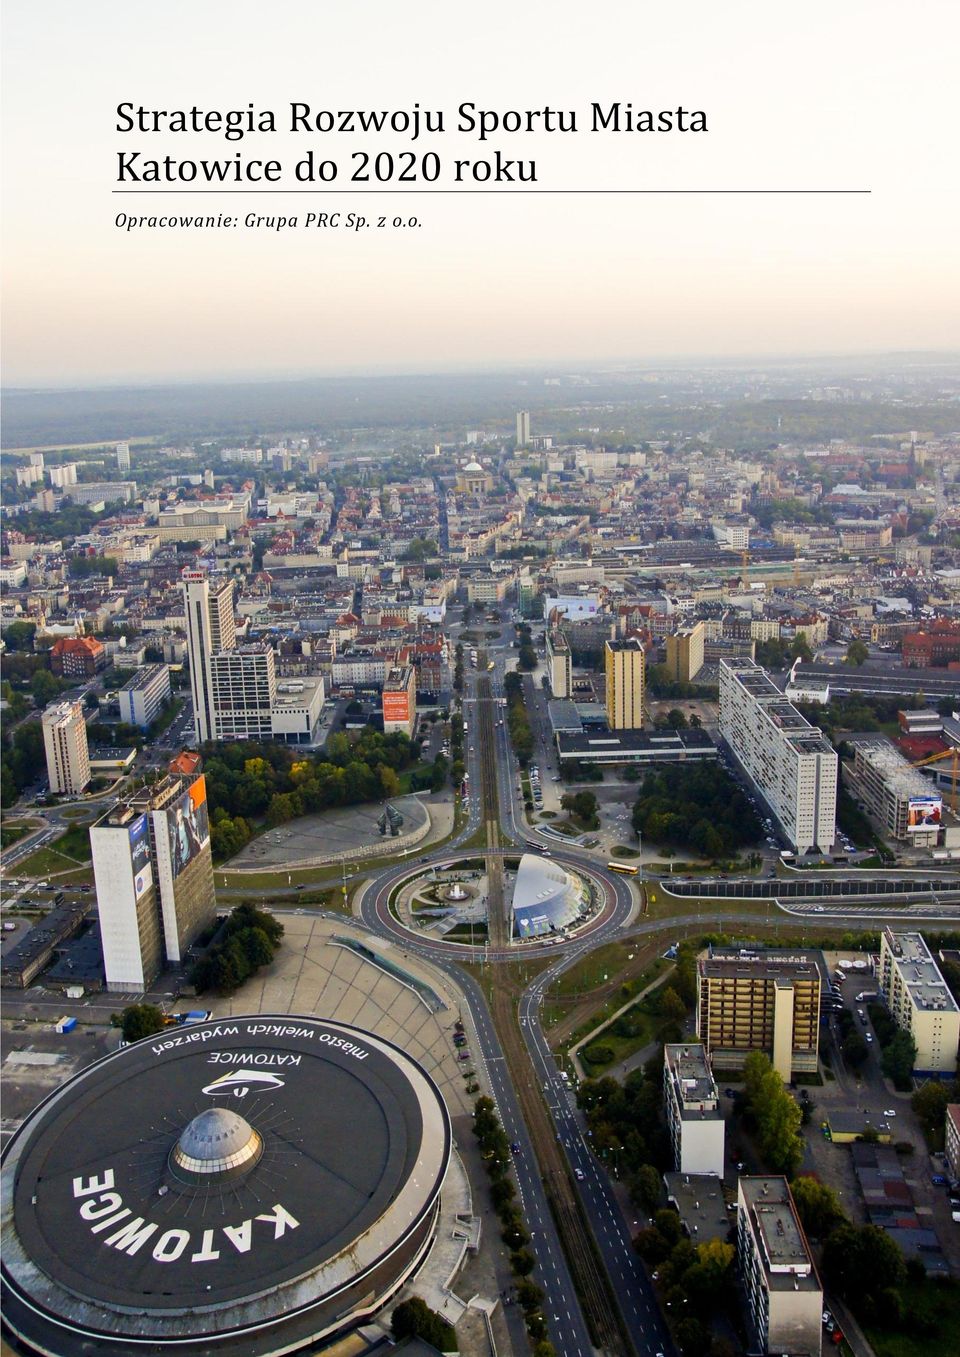 Katowice do 2020 roku